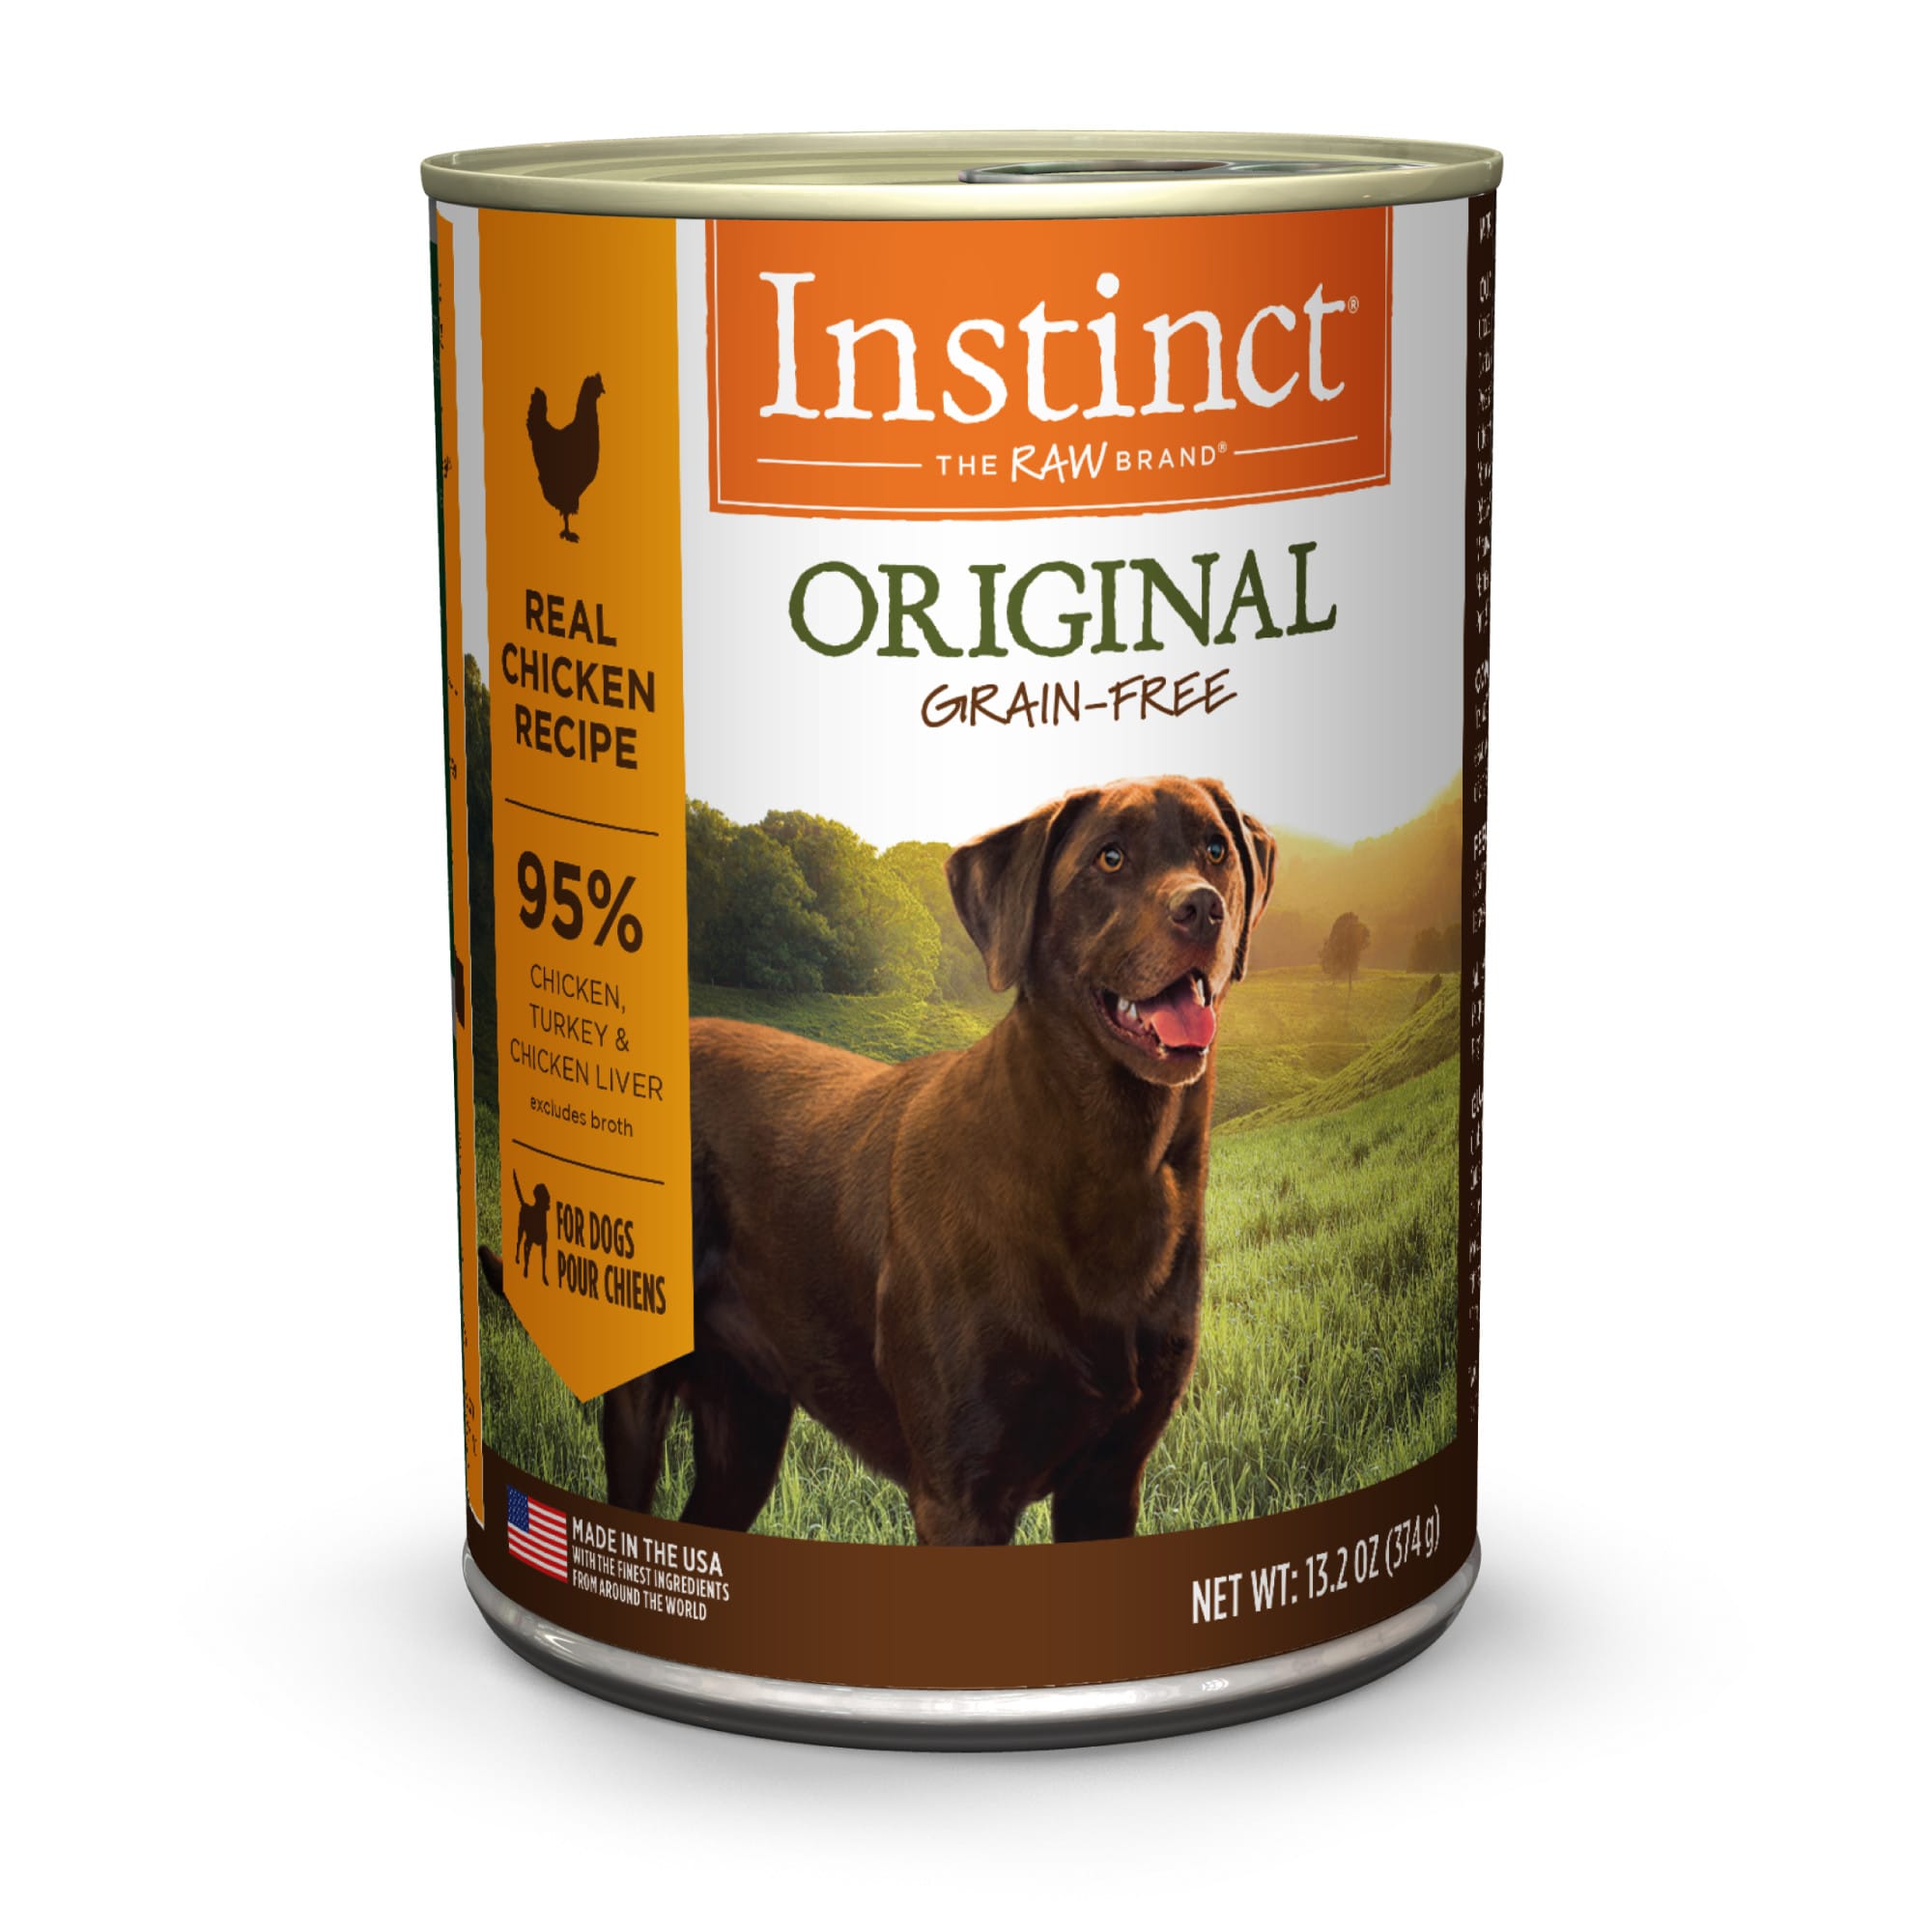 nature's variety instinct dog food